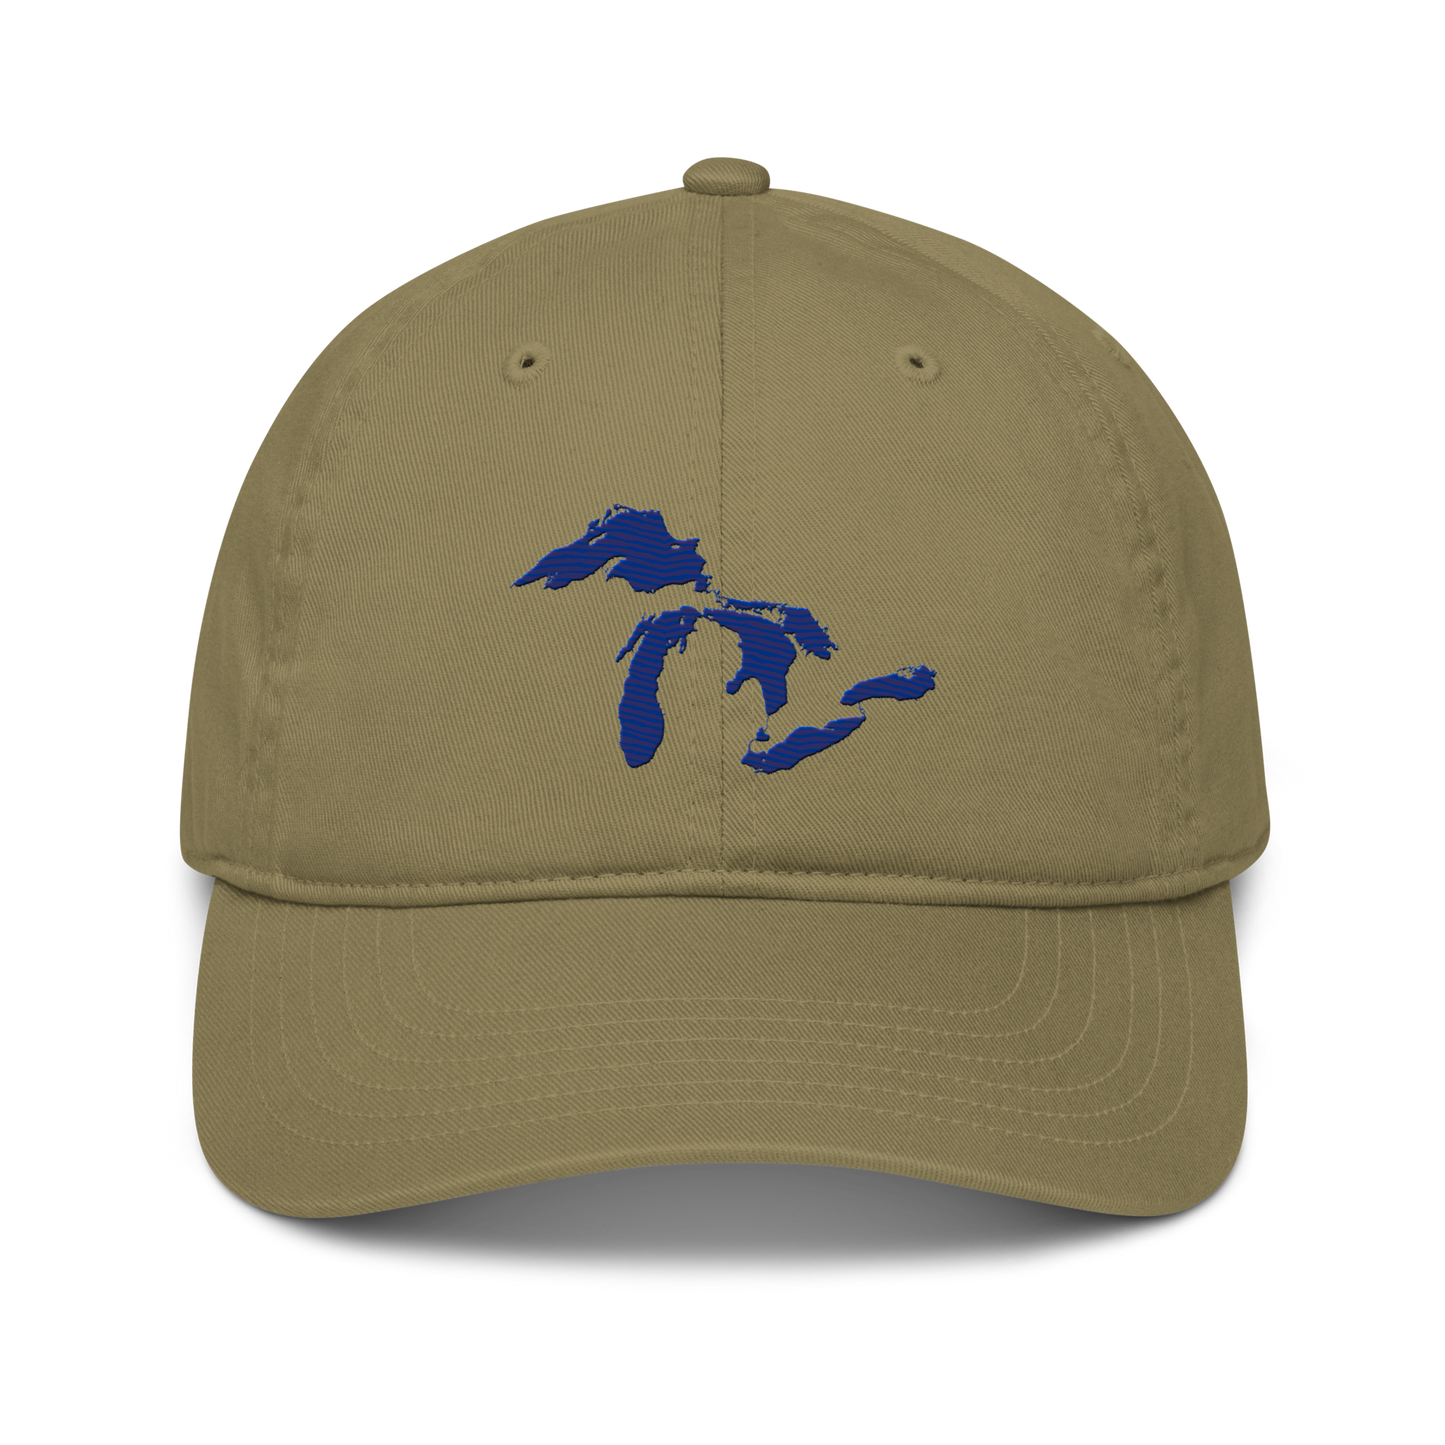 Great Lakes Classic Baseball Cap | Bourbon Blue